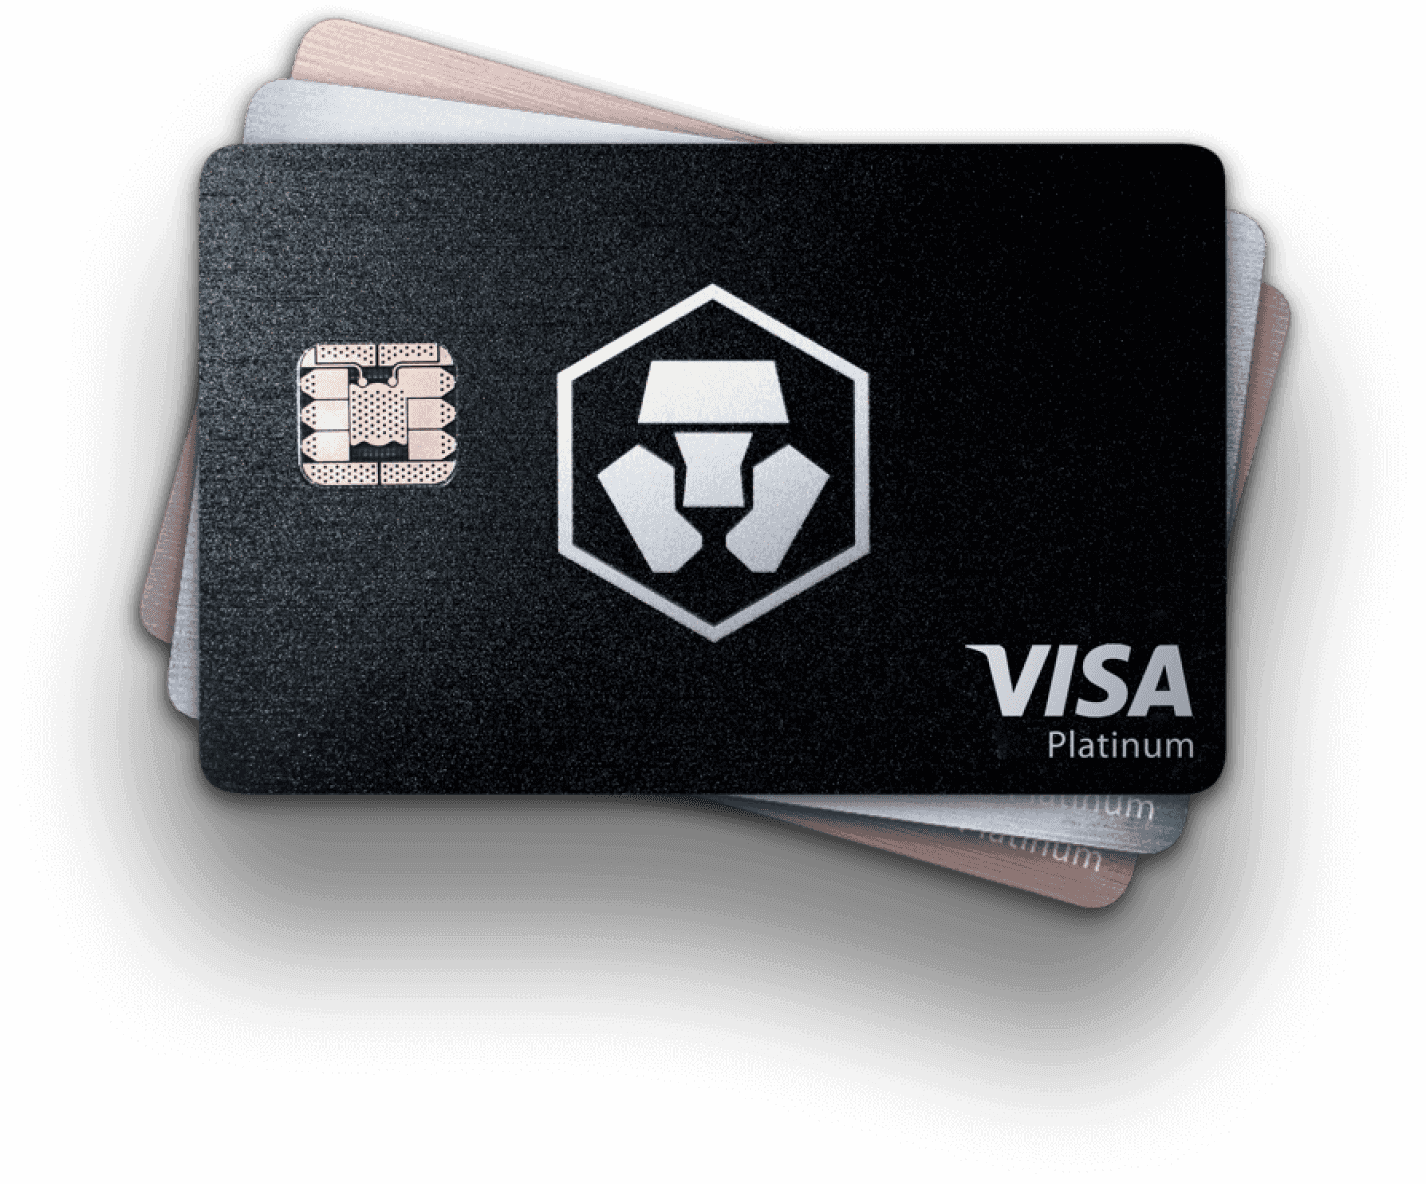 can i use a visa gift card on crypto.com